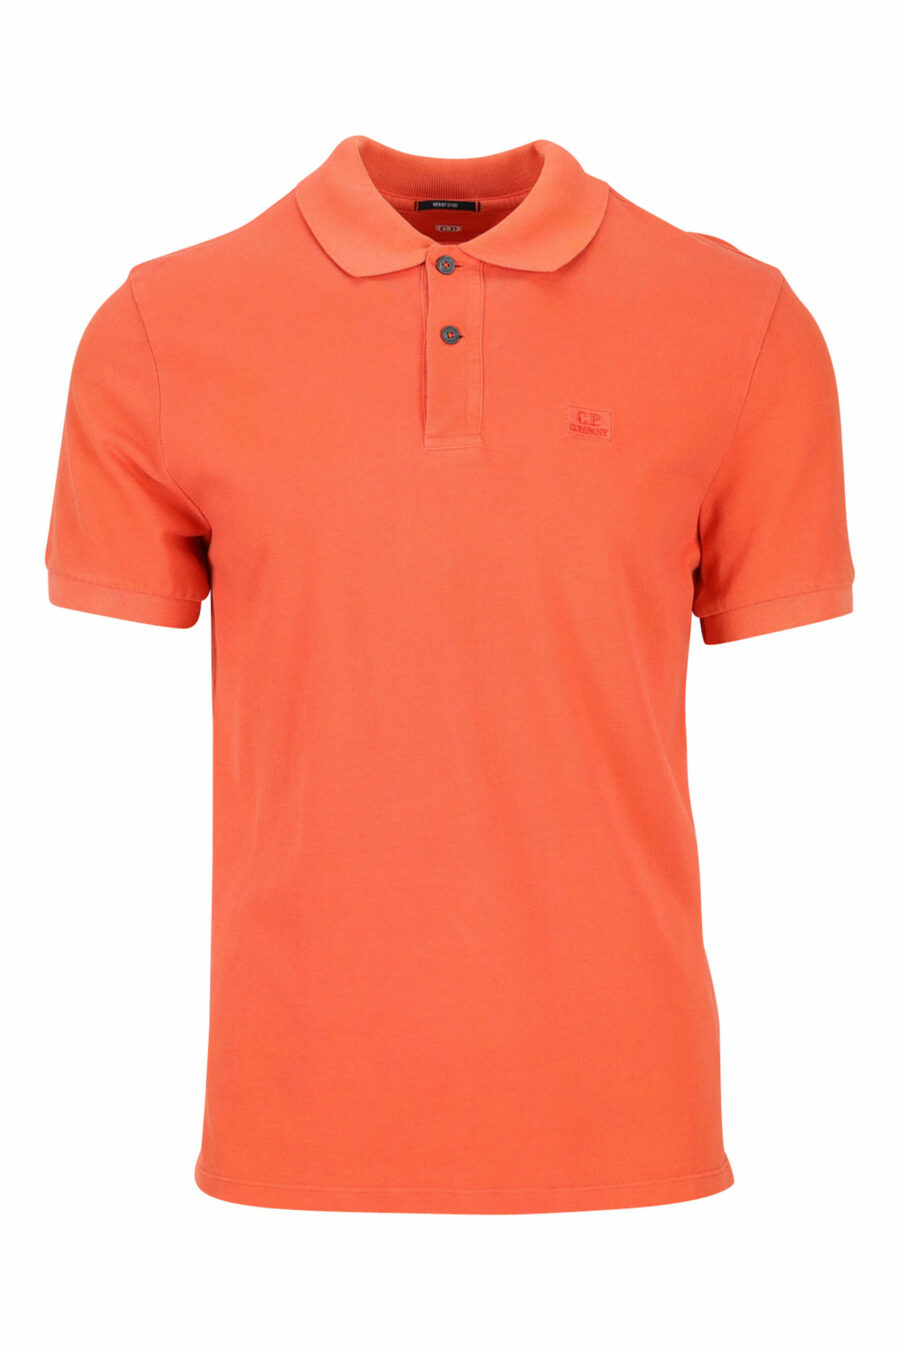 Orangefarbenes Poloshirt mit Mini-Logoaufnäher - 7620943642247 skaliert